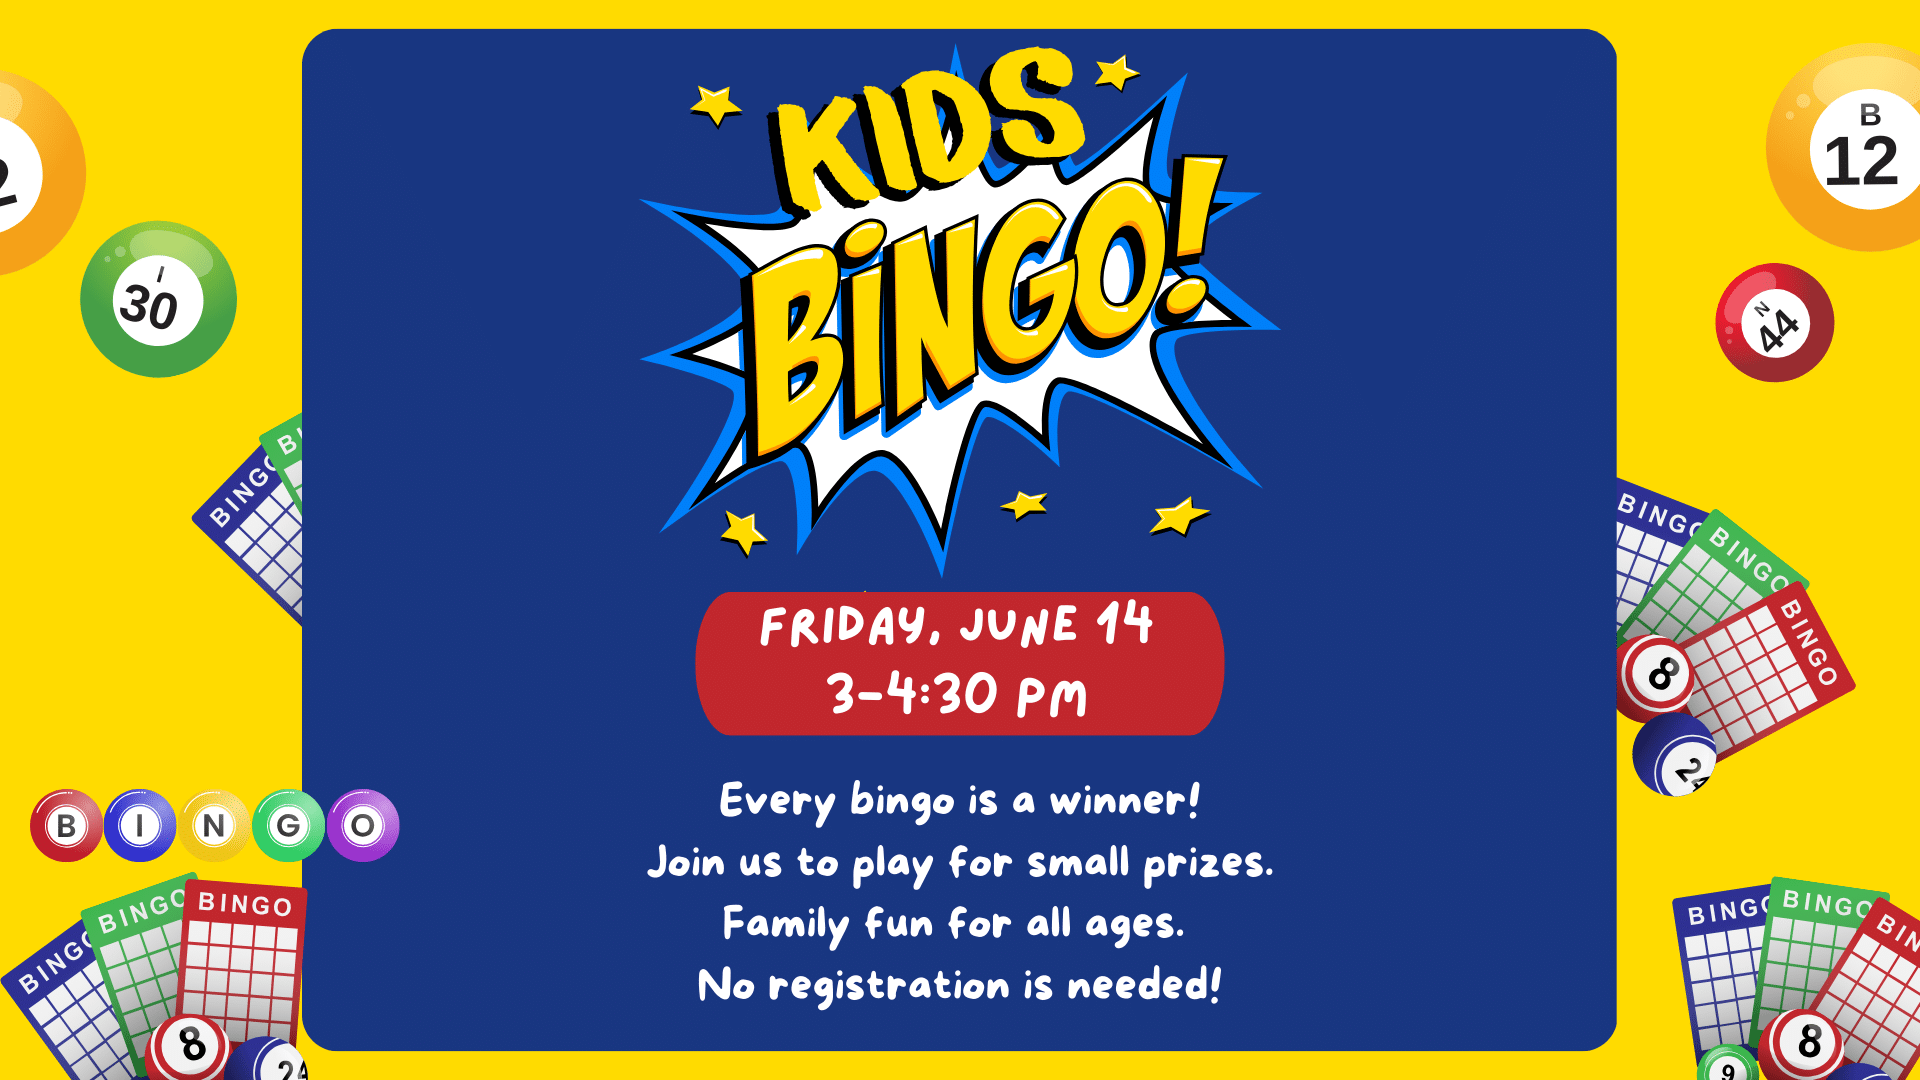 Kids Bingo, Friday, June 14 at 3:00 pm